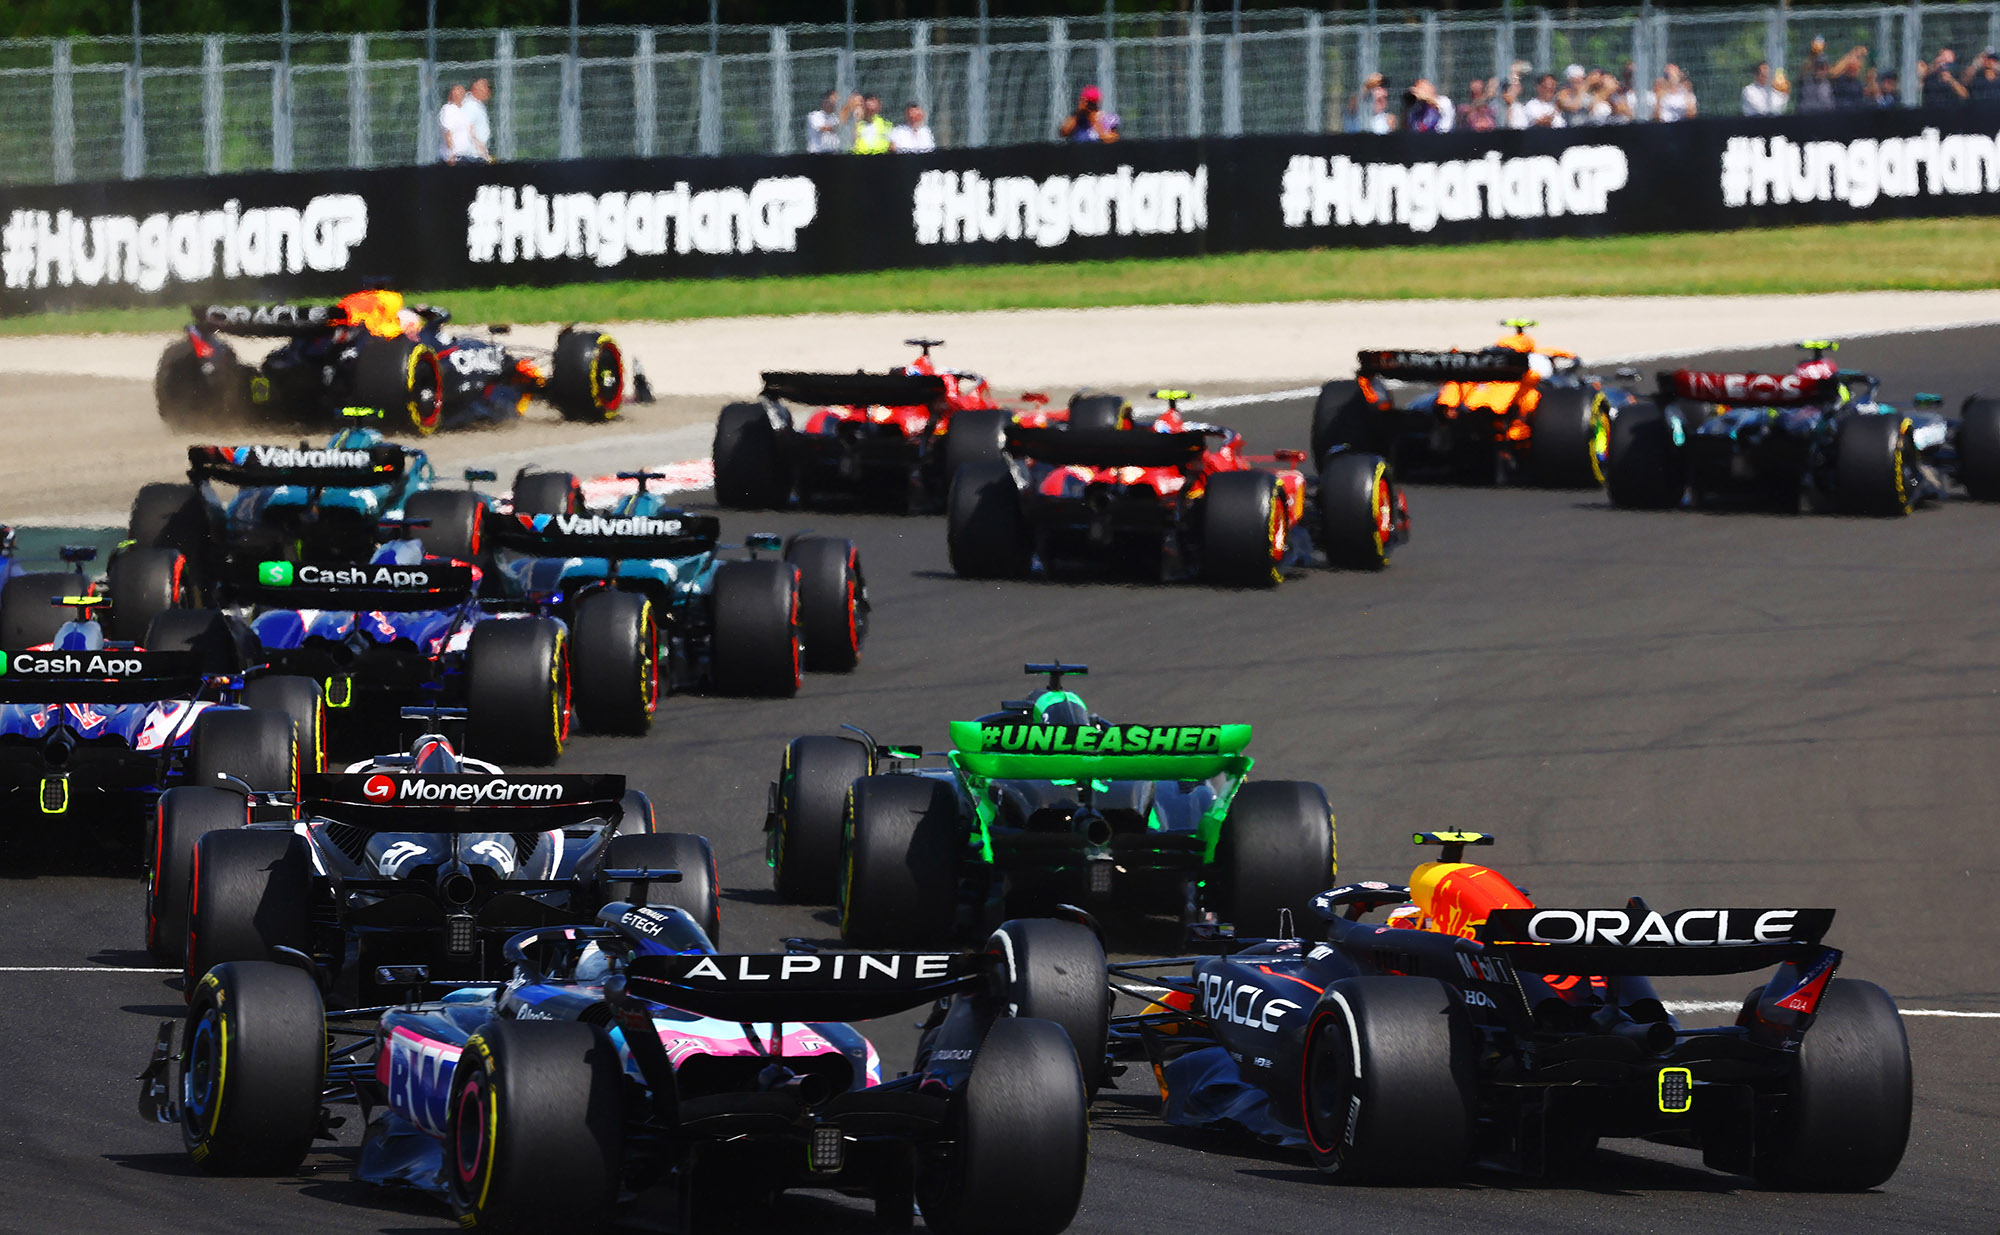 Grand Prix of Hungary